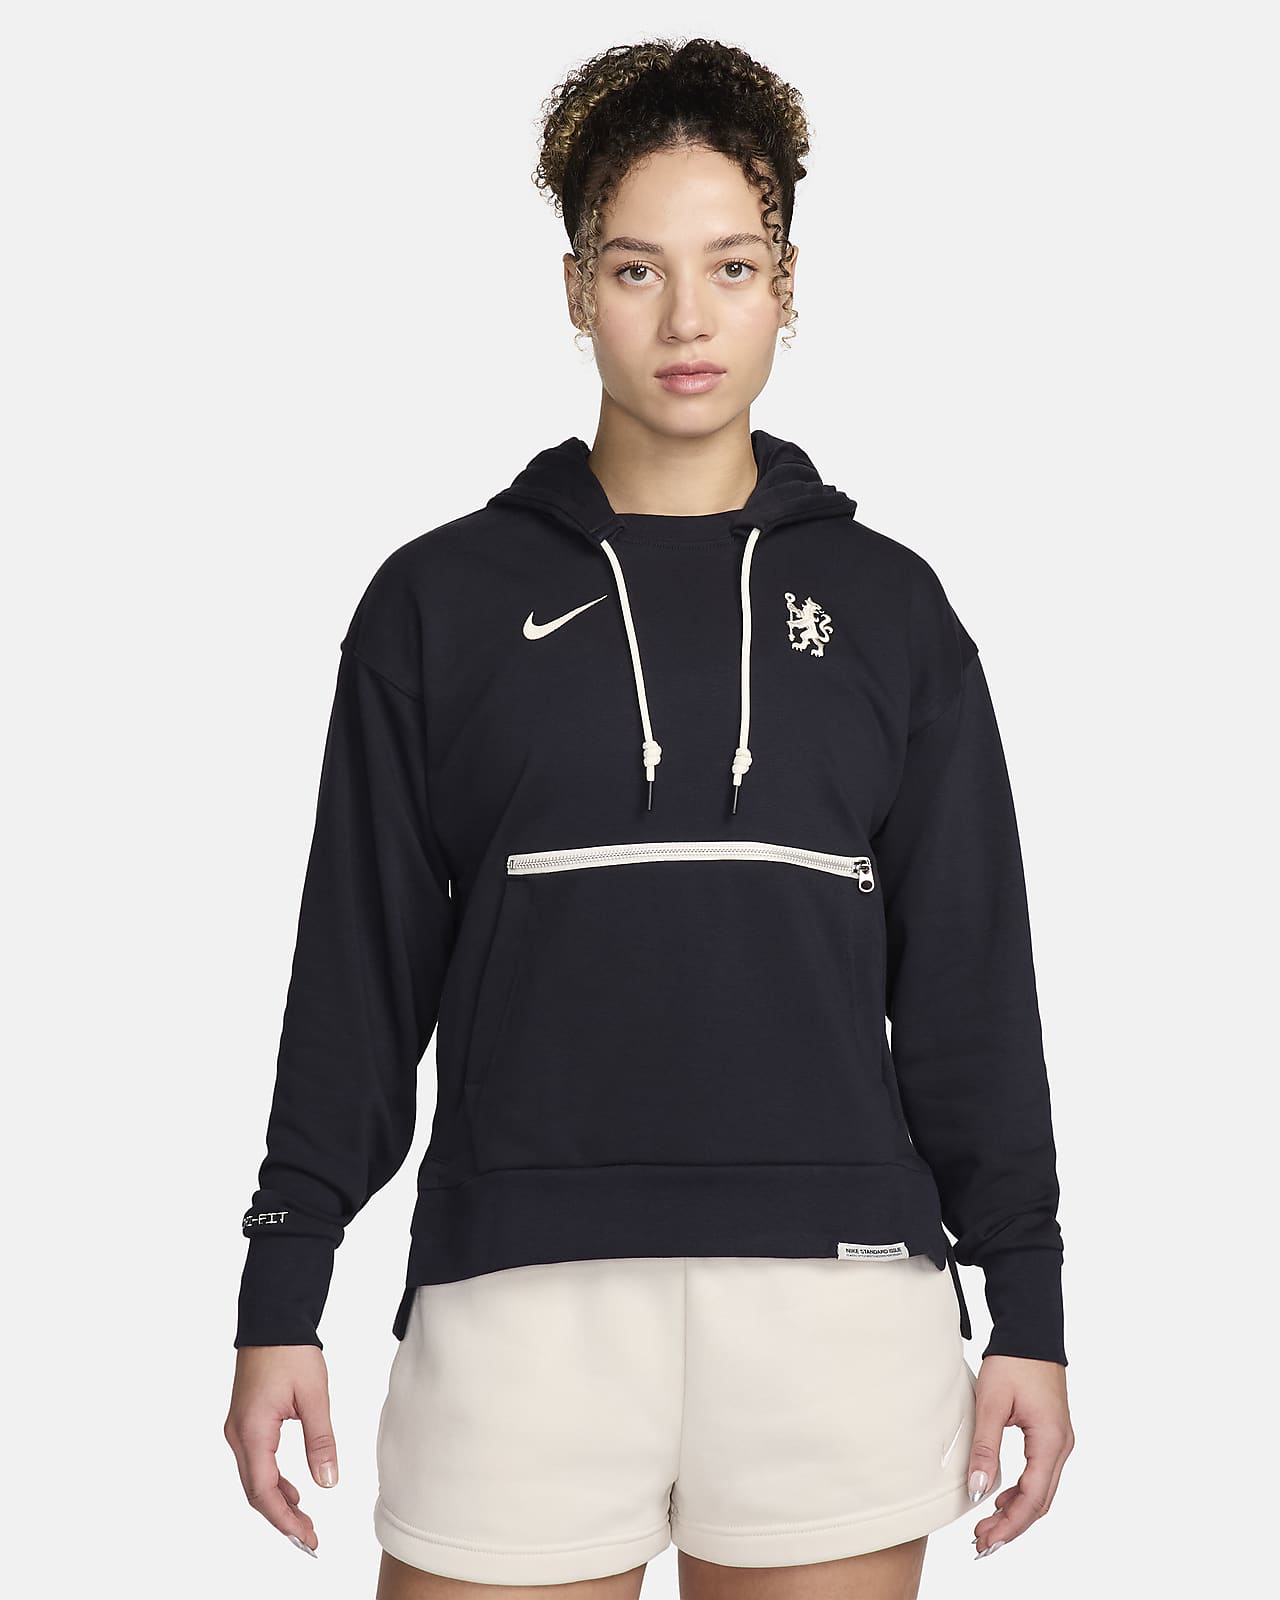 Chelsea FC Standard Issue Sudadera con capucha de fútbol con estampado Nike Dri-FIT - Mujer